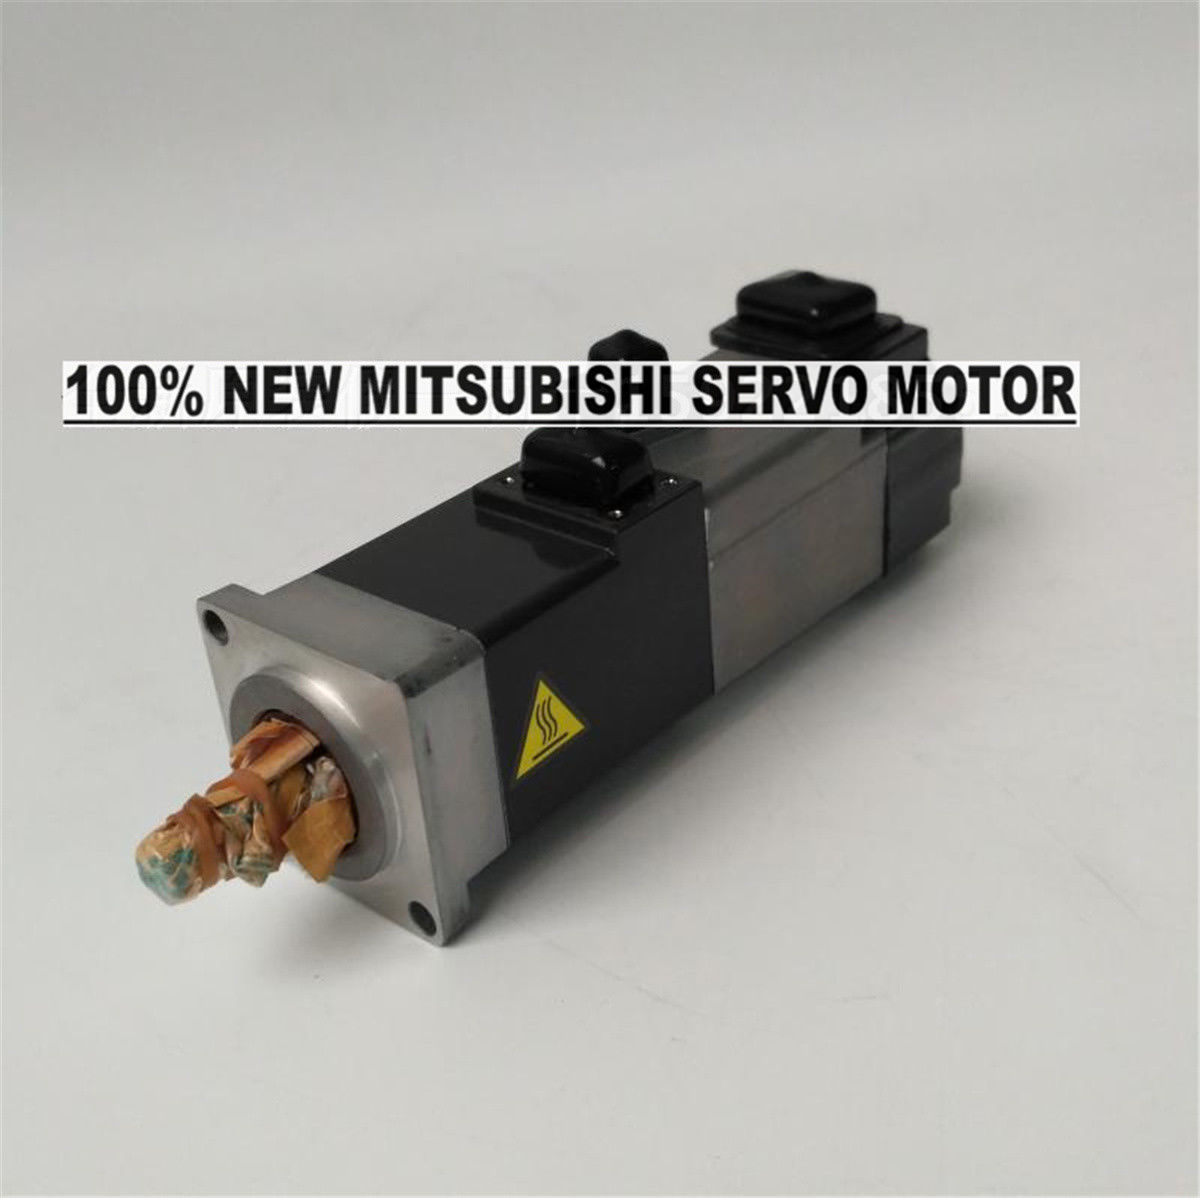 NEW Mitsubishi Servo Motor HF-KN13BJ-S100 in box HFKN13BJS100 - zum Schließen ins Bild klicken